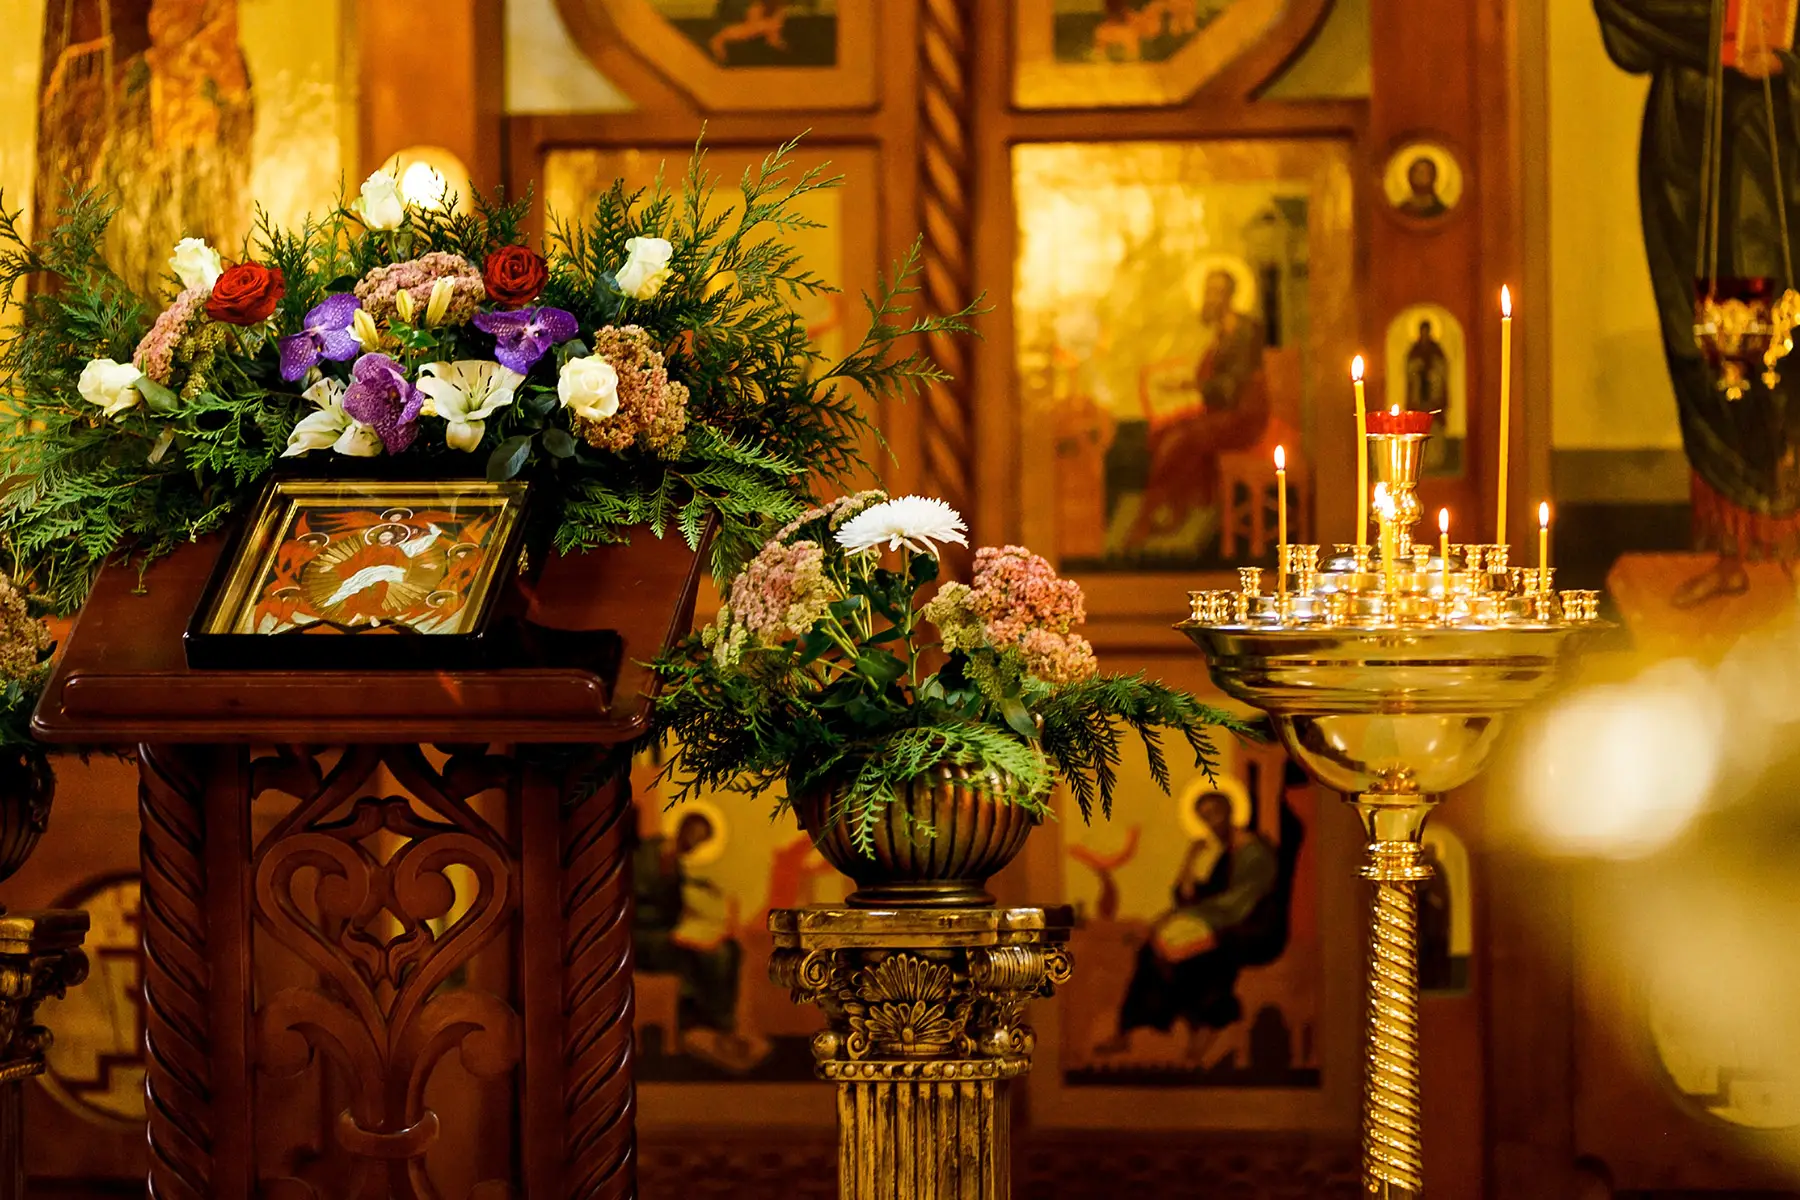 Russian Orthodox Christmas